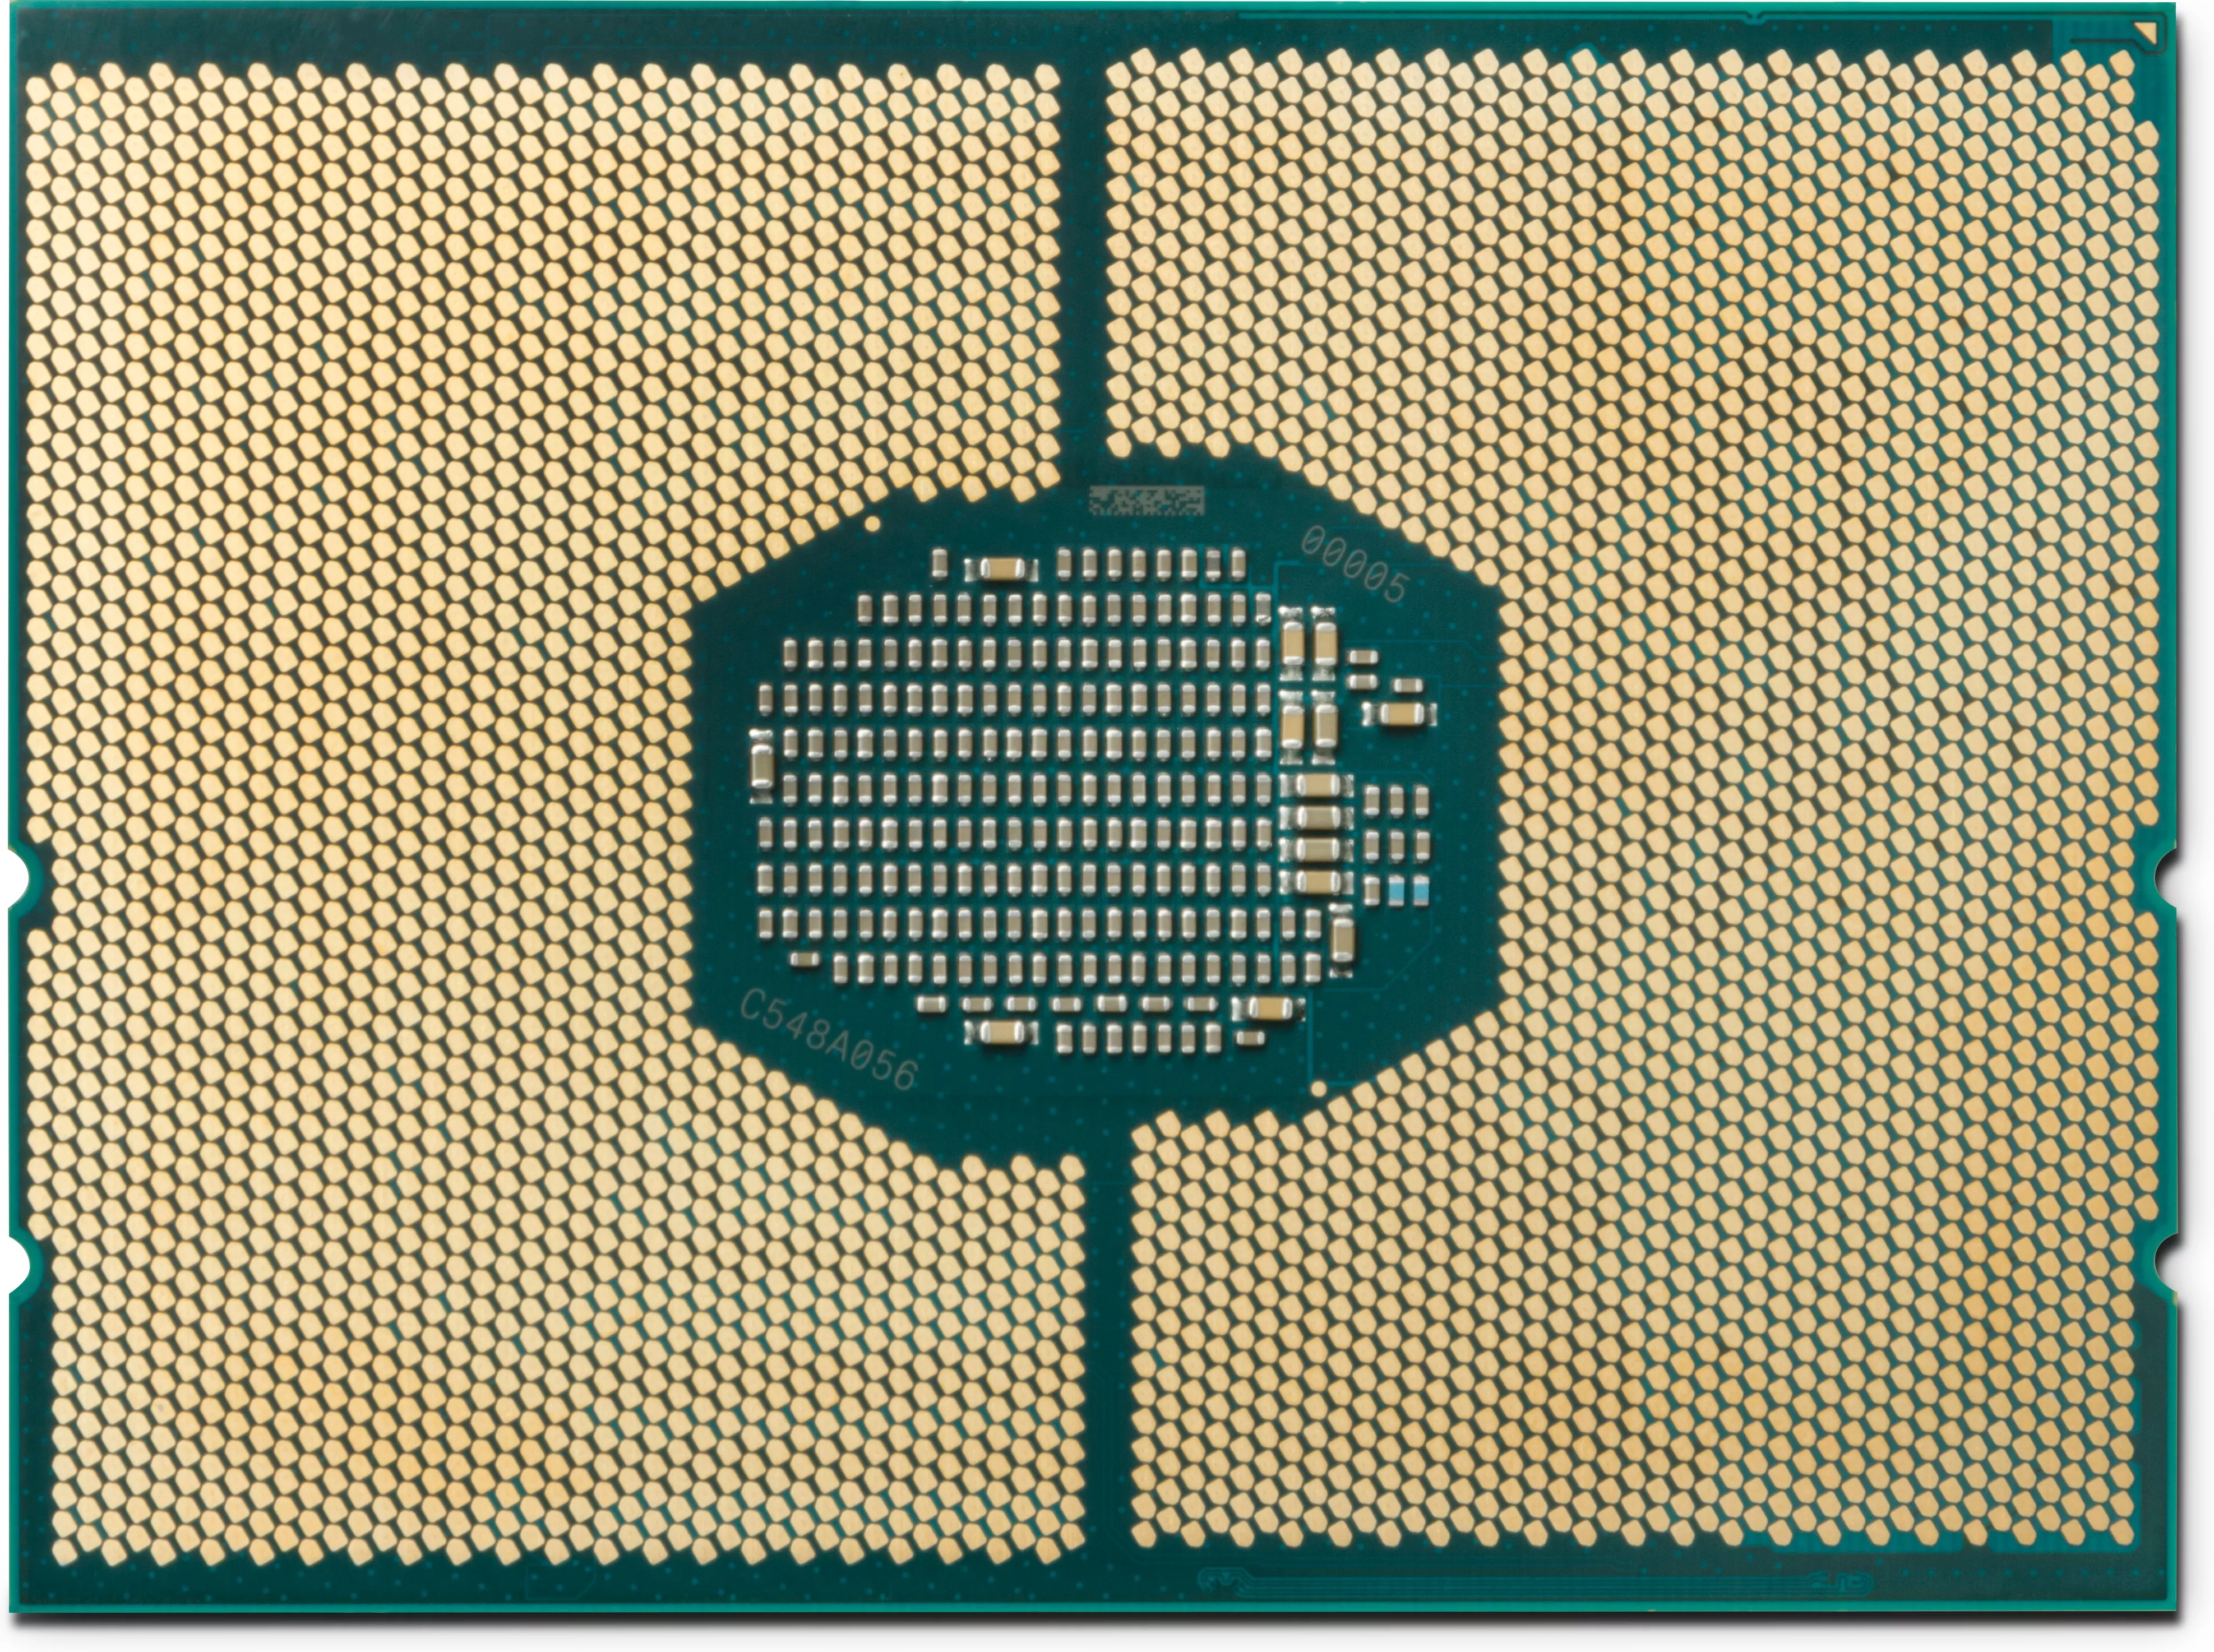 Achat Processeur HP Z8G4 Xeon 6226 2.7 2933 12C 125W CPU2